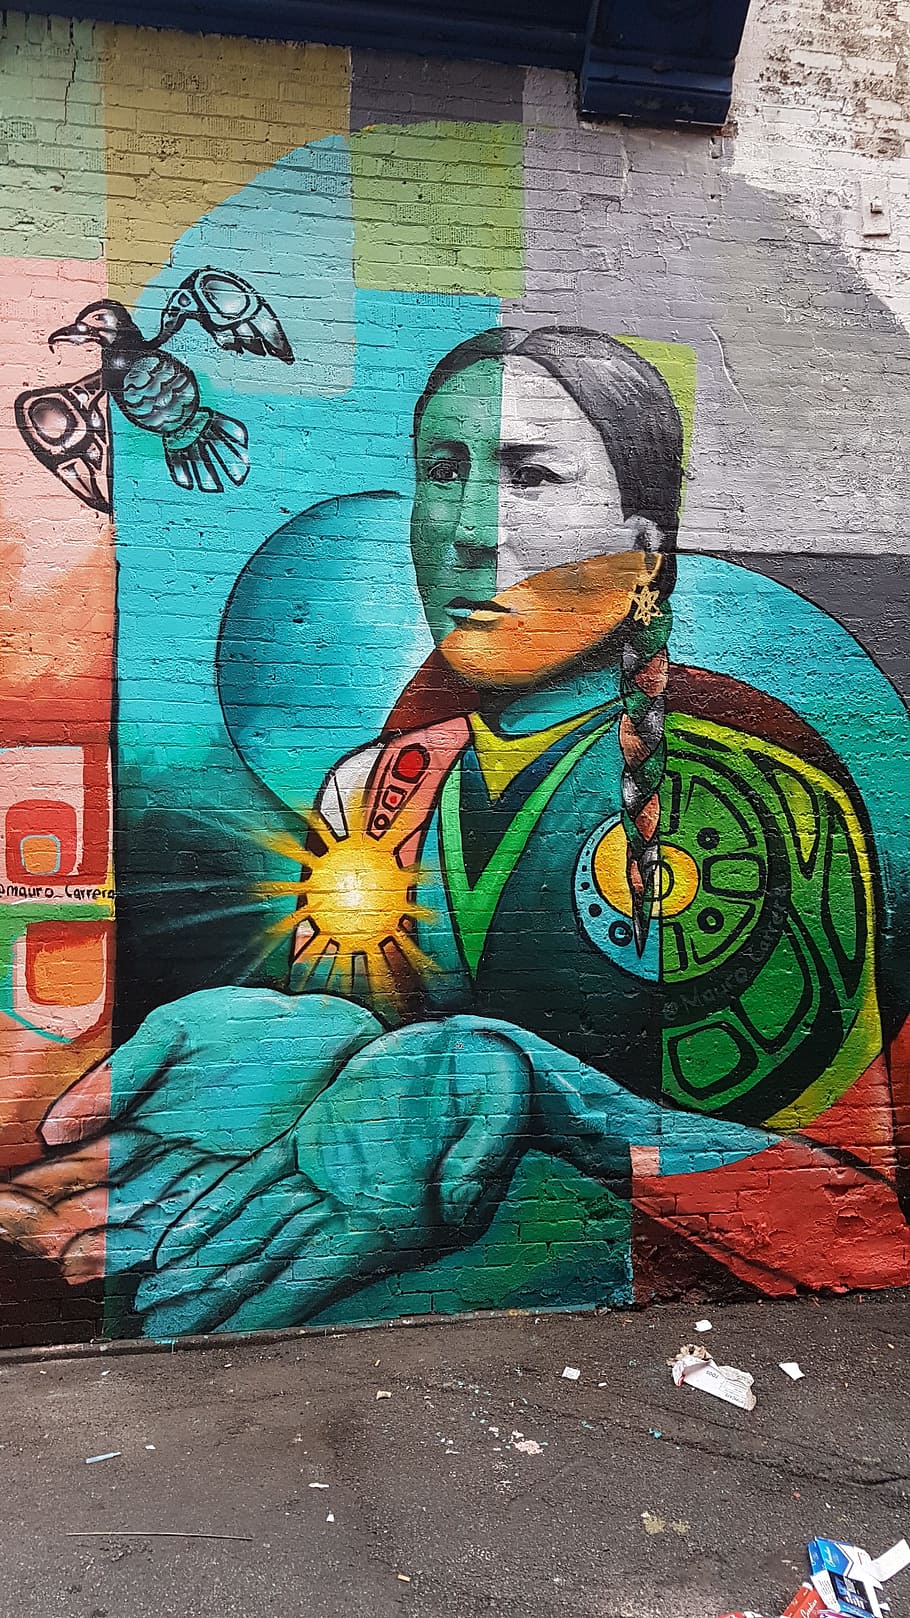 native, hope, bird, art and craft, creativity, graffiti, human representation, representation, street art, multi colored